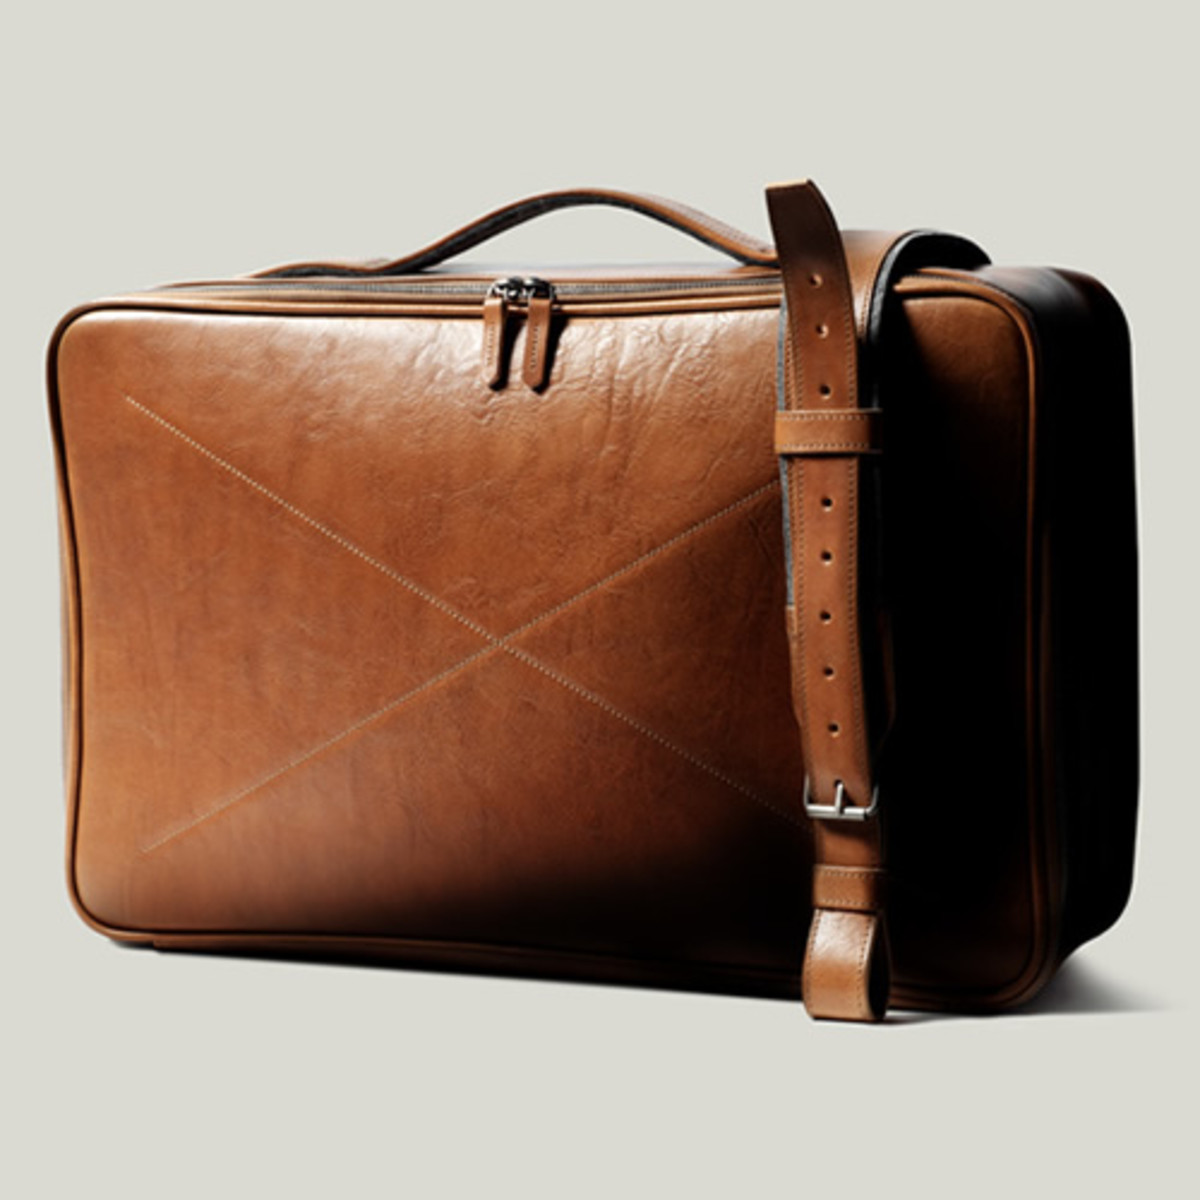 Hard Graft CarryOn Suitcase & Frame1 Camera Bag - Acquire